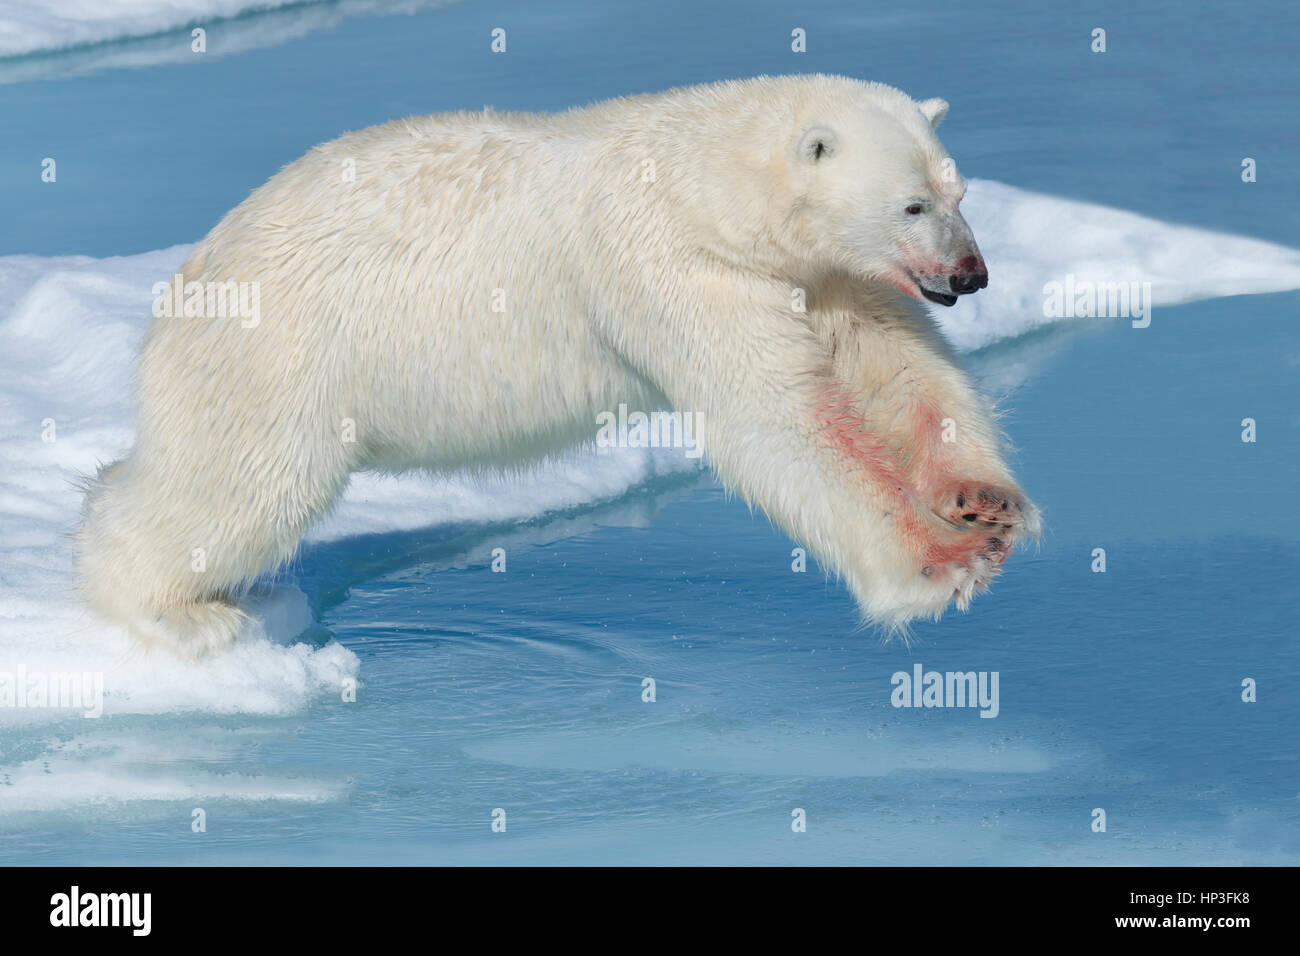 Male Polar bear (Ursus maritimus) with blood on his legs jumping over open water, Spitsbergen Island, Svalbard archipelago, Norway, Europe Stock Photo